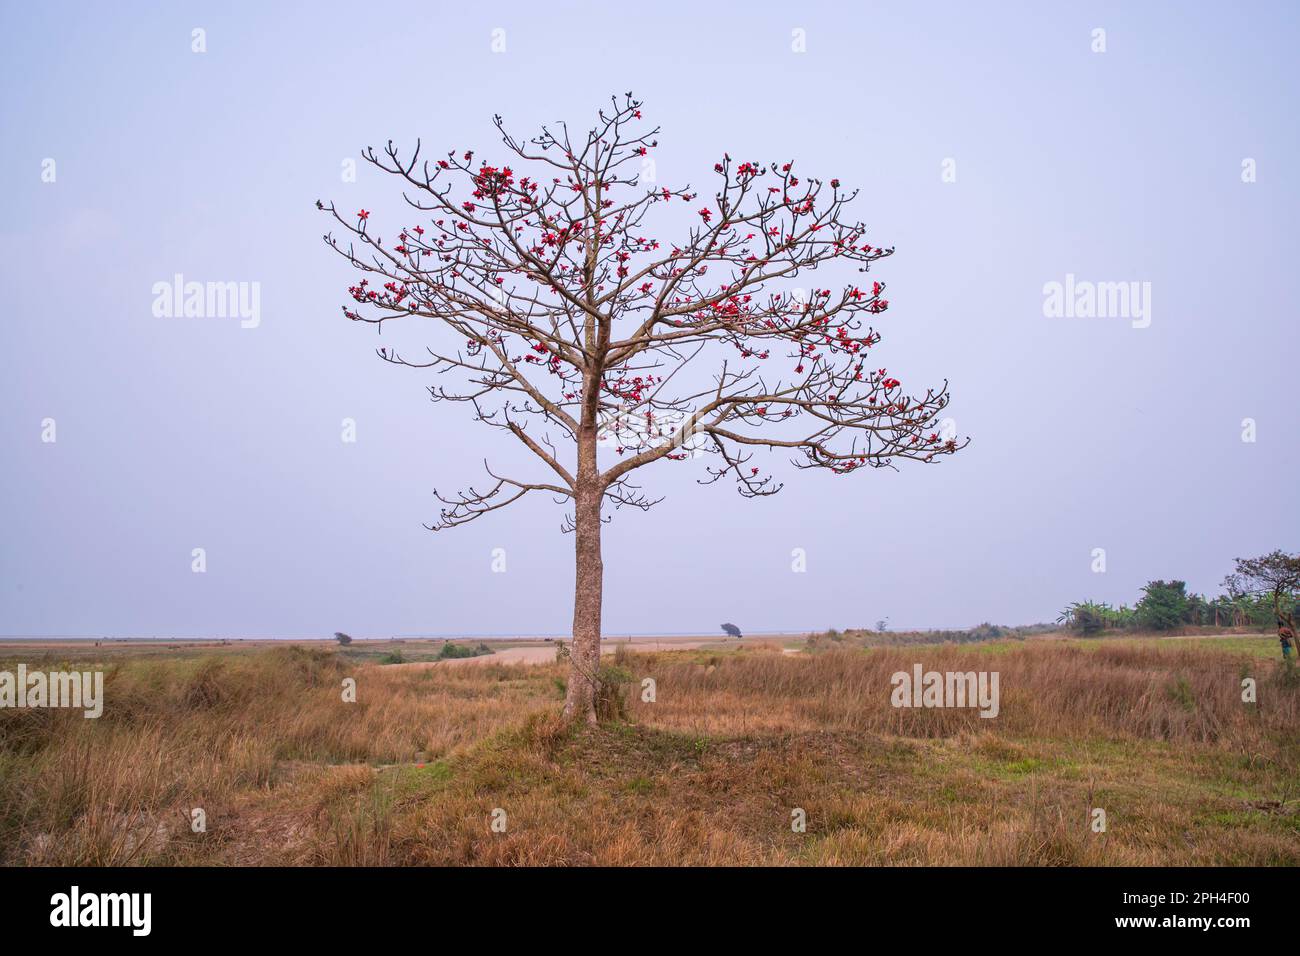 Bombax ceiba Baum mit roten Blüten auf dem Feld unter dem blauen Himmel Stockfoto